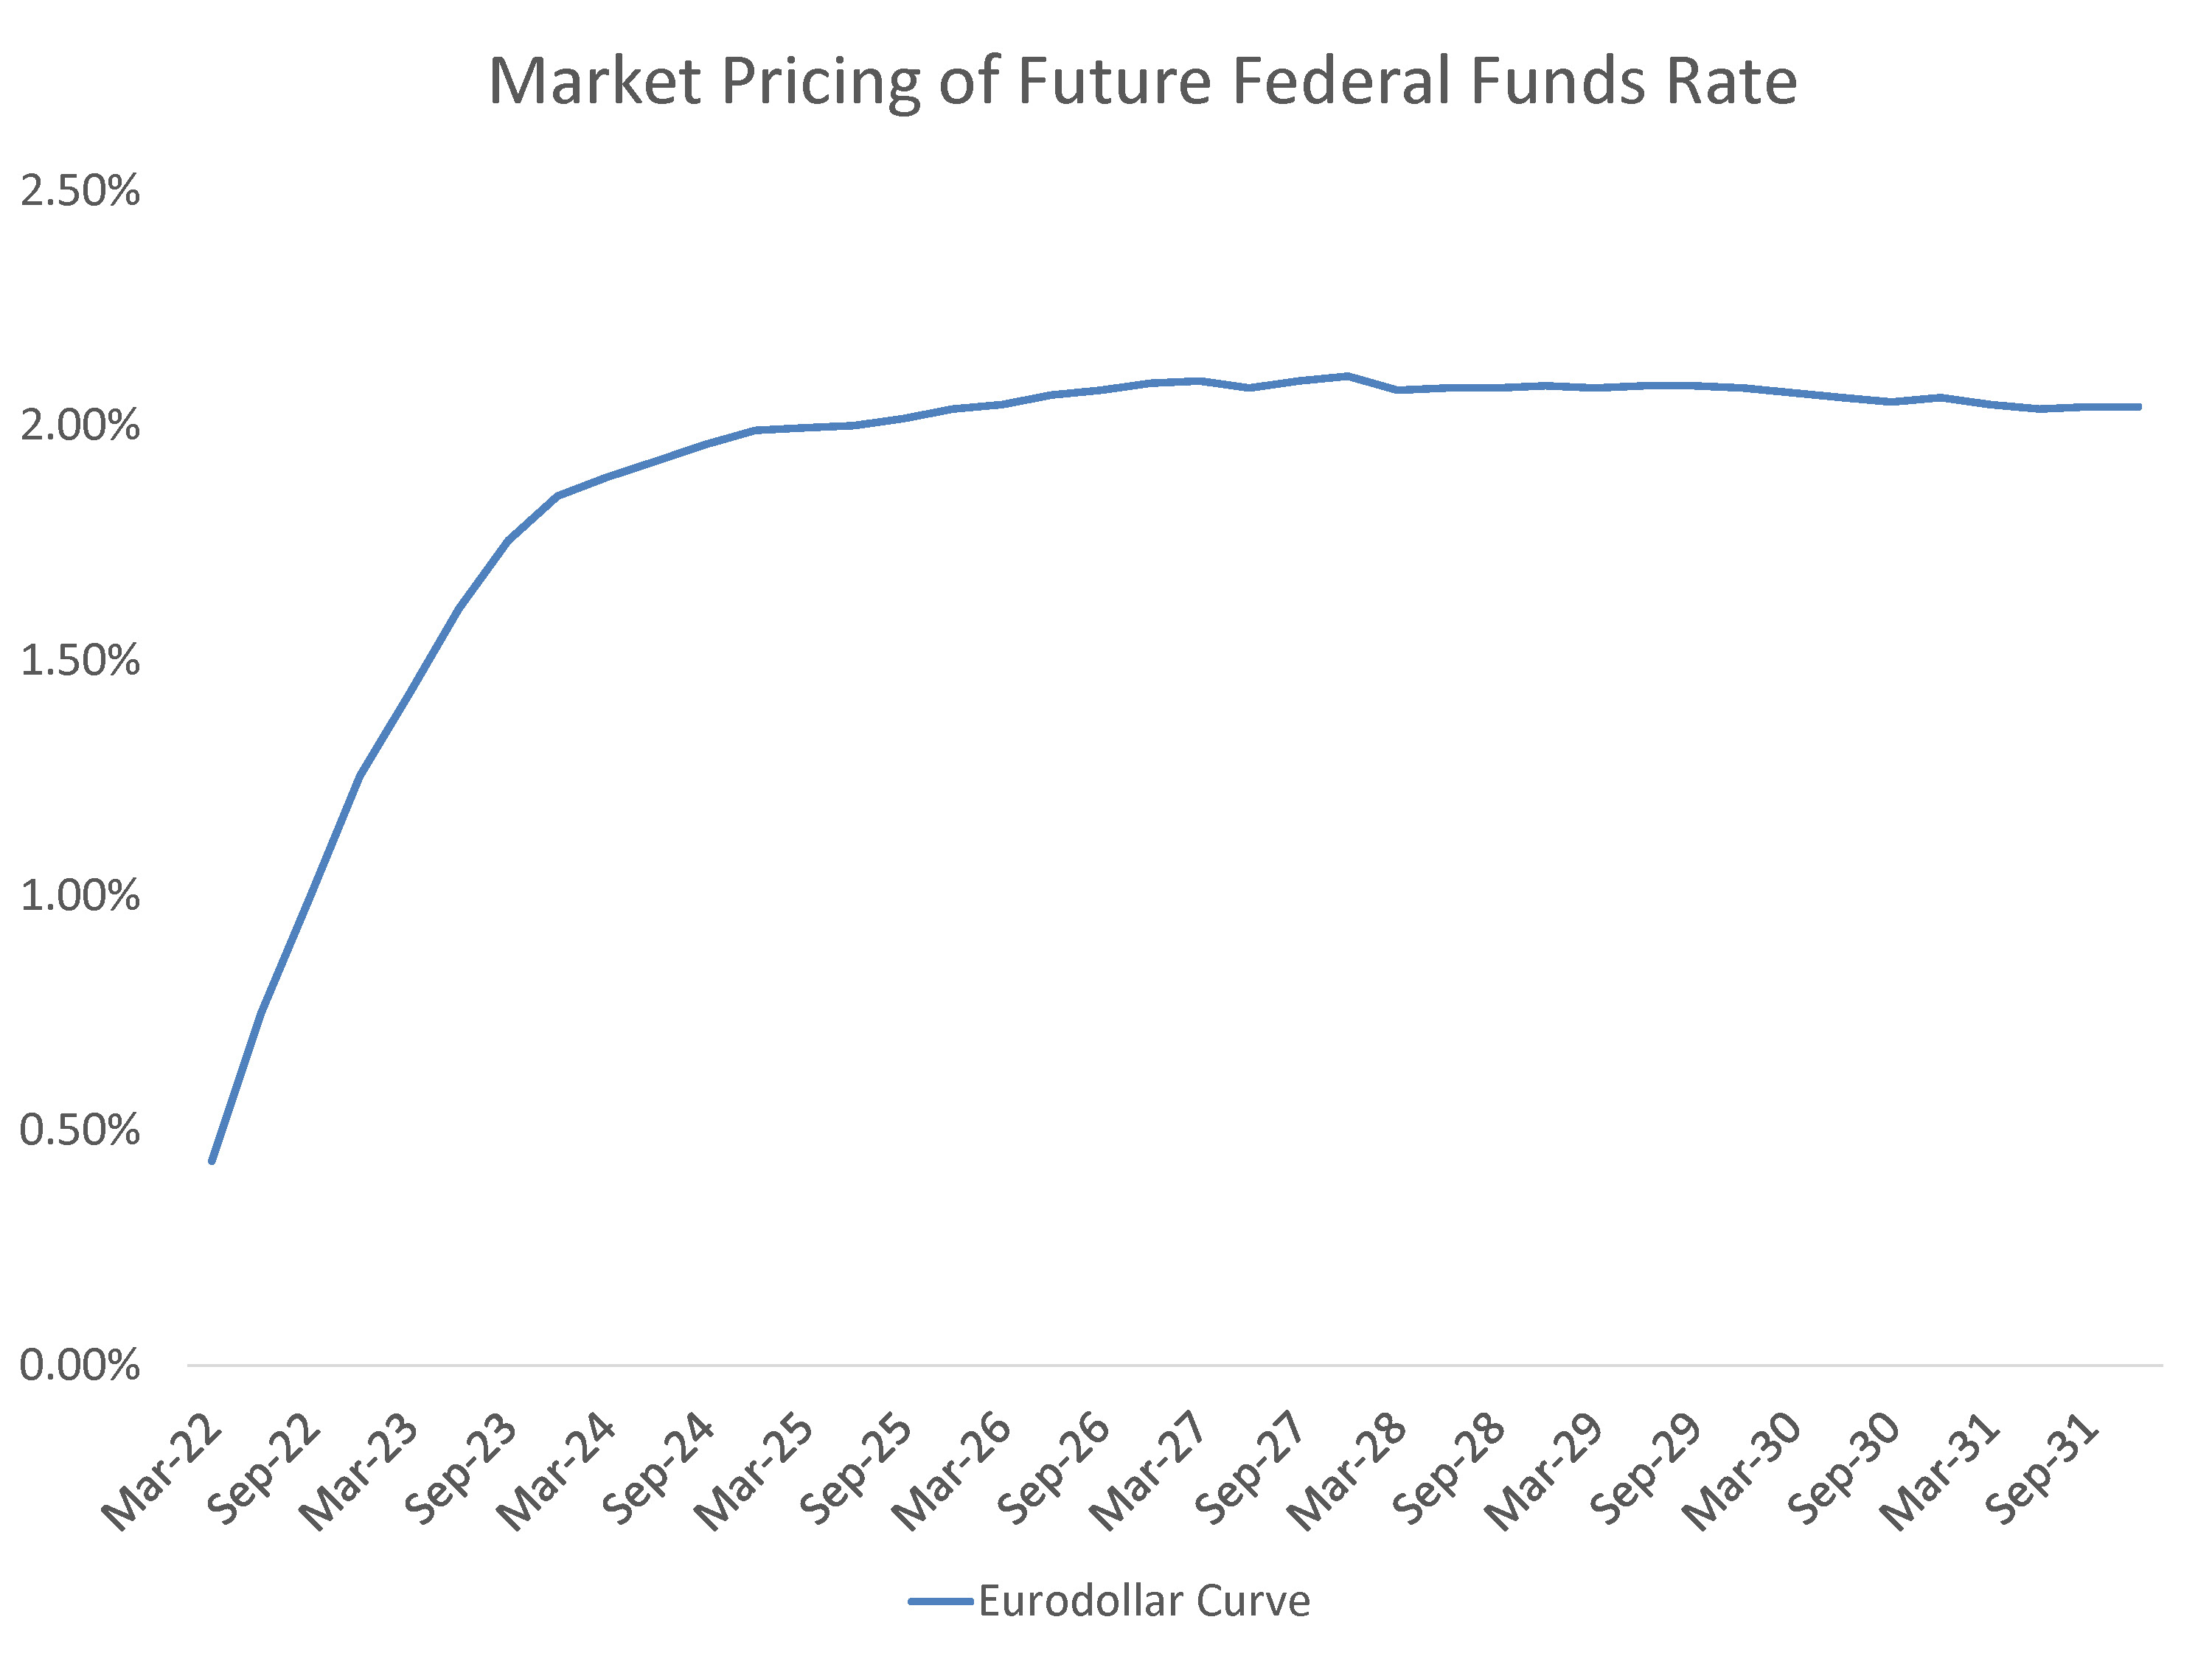 Market Pricing of Future FFR